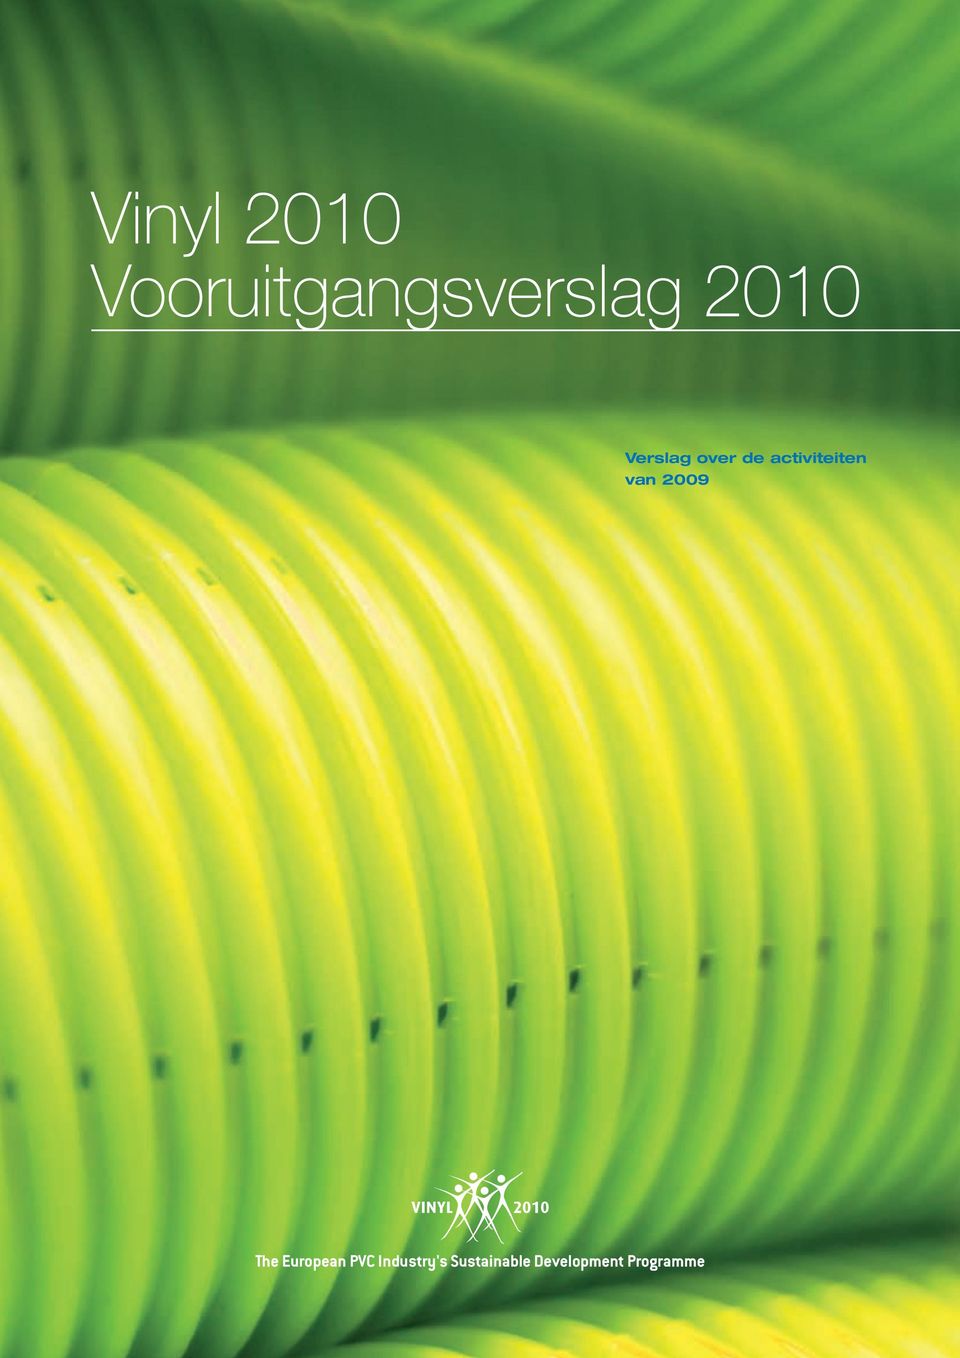 van 2009 The European PVC